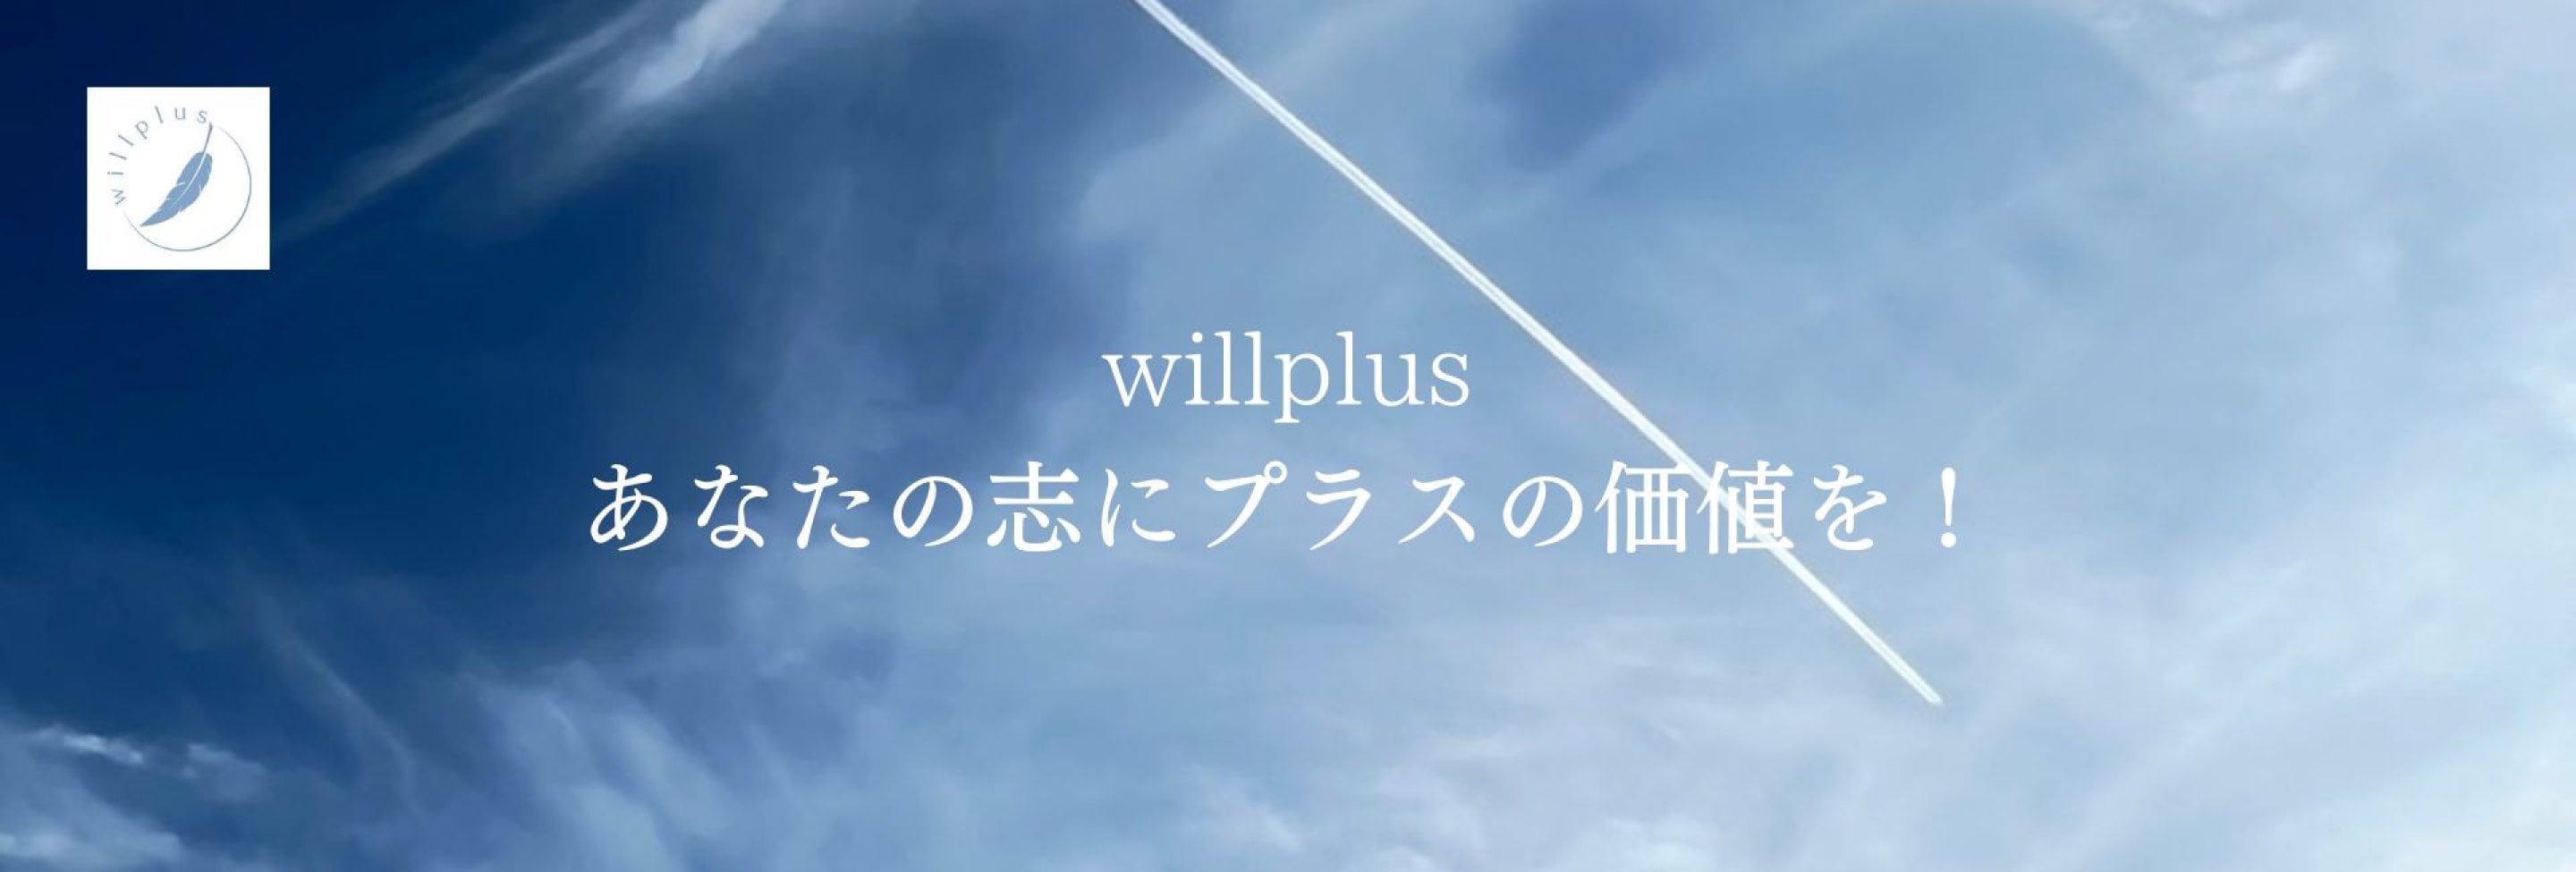 willplus